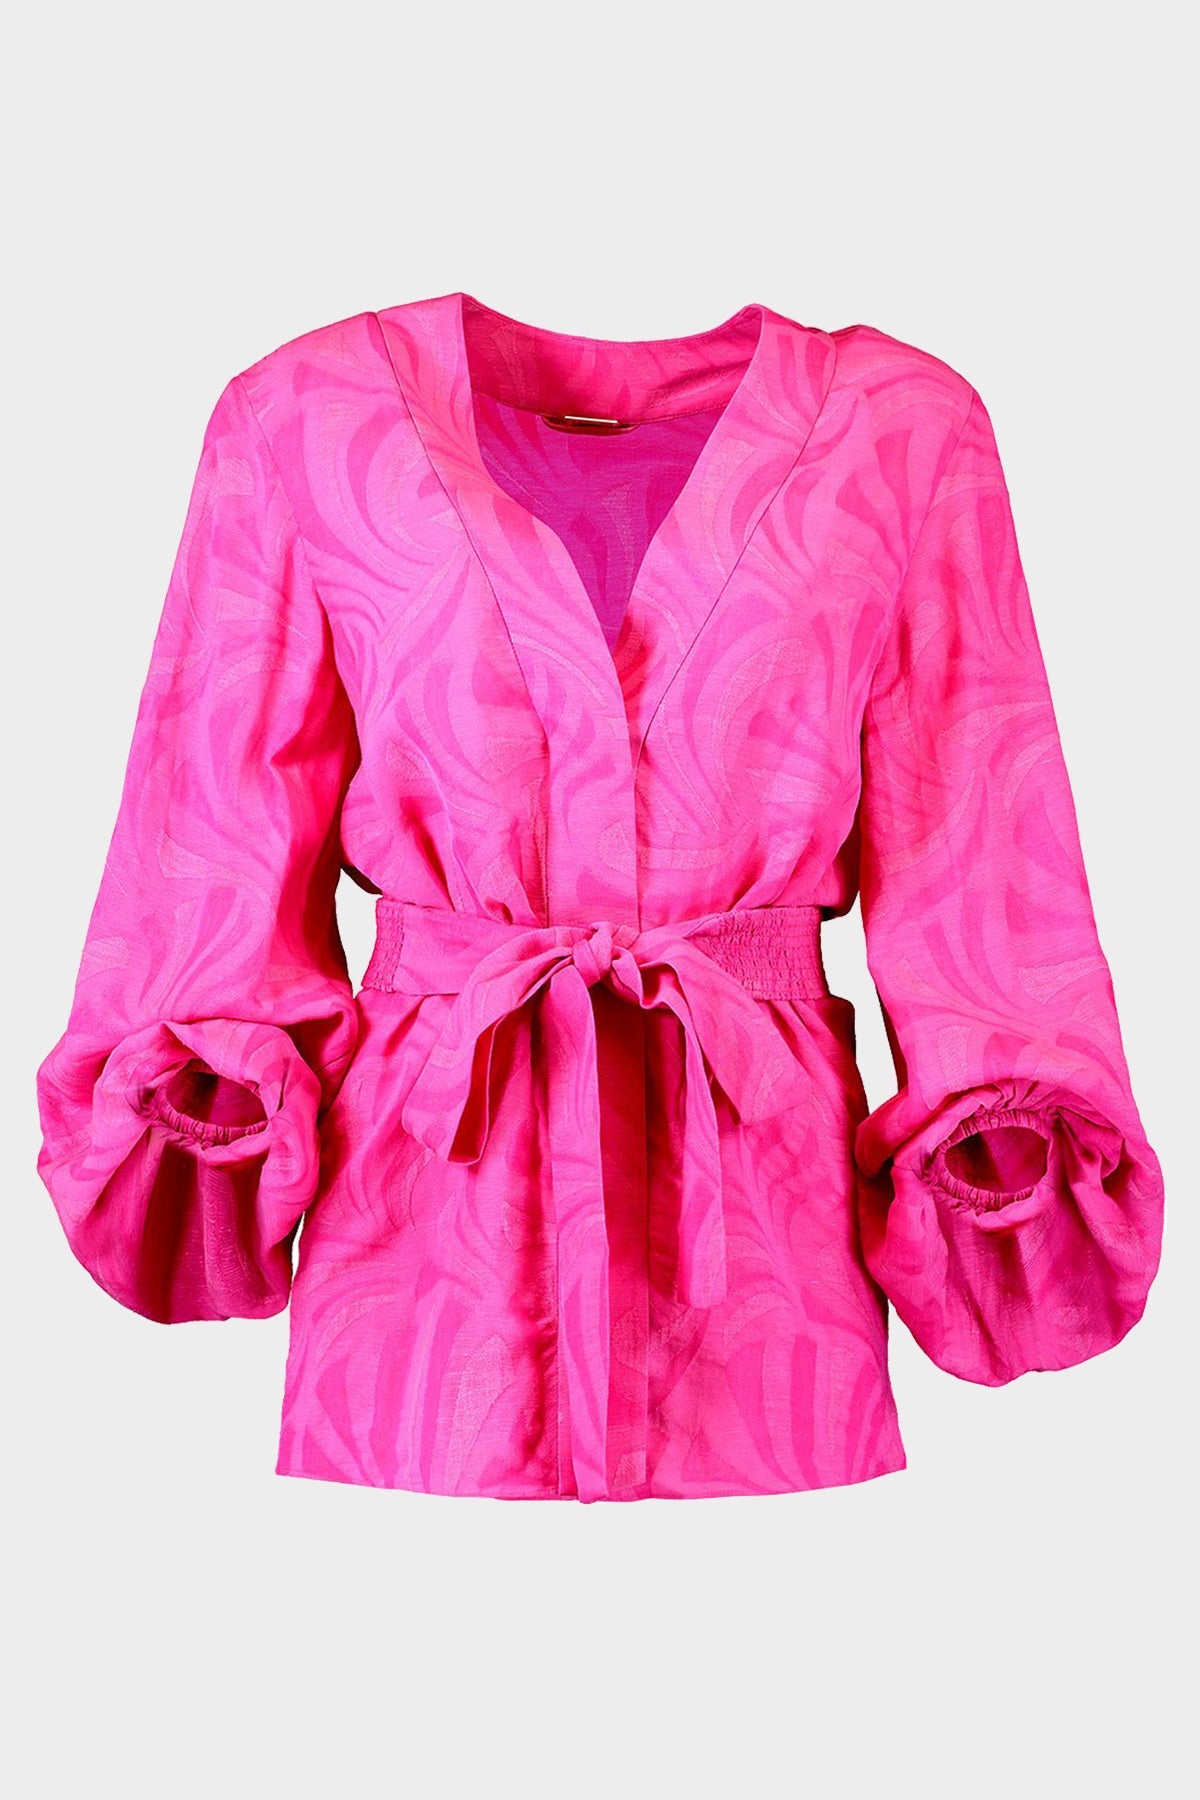 Athena Wrap Top in Pink - shop-olivia.com